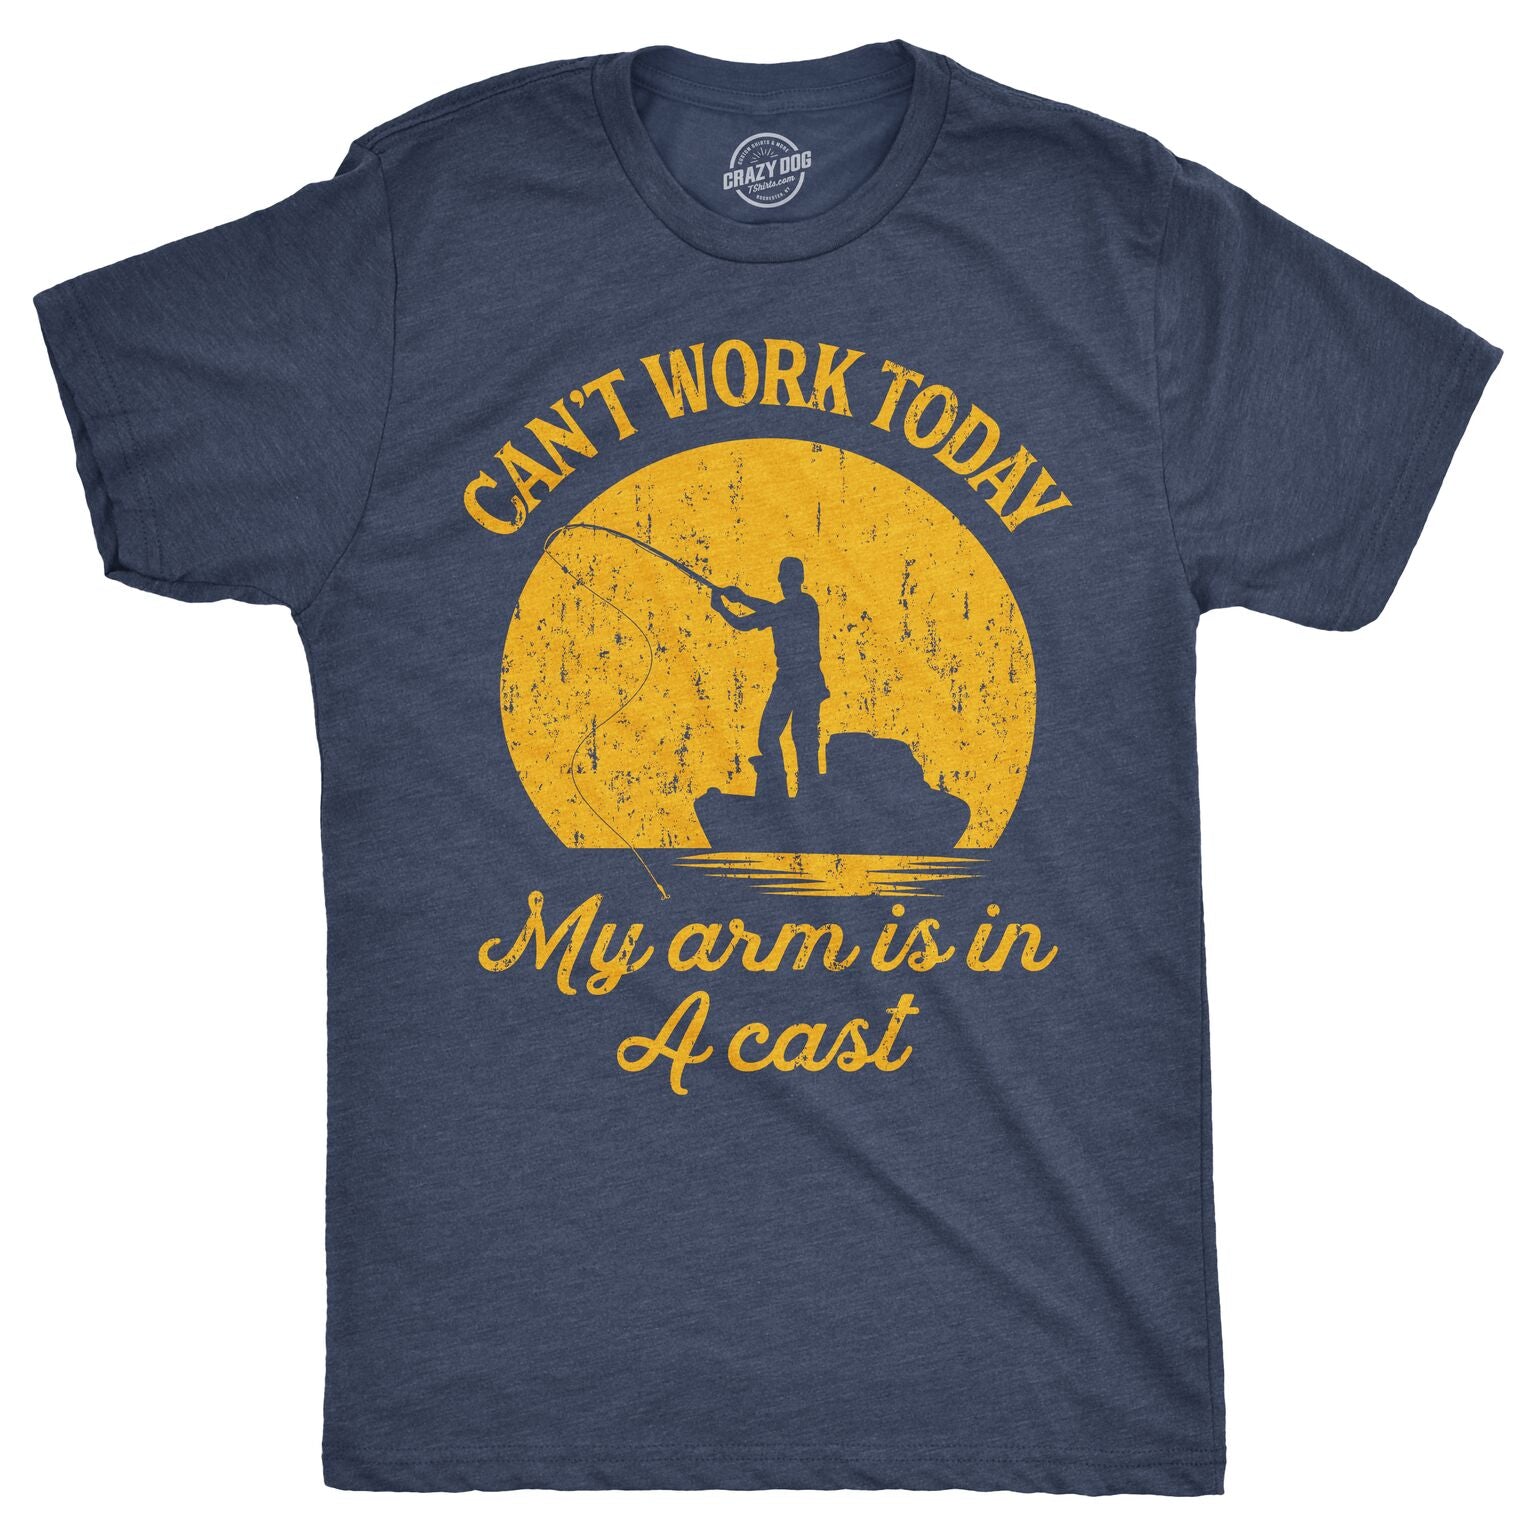 Can't Work Today My Arm Is In A Cast Men's T Shirt - Crazy Dog T